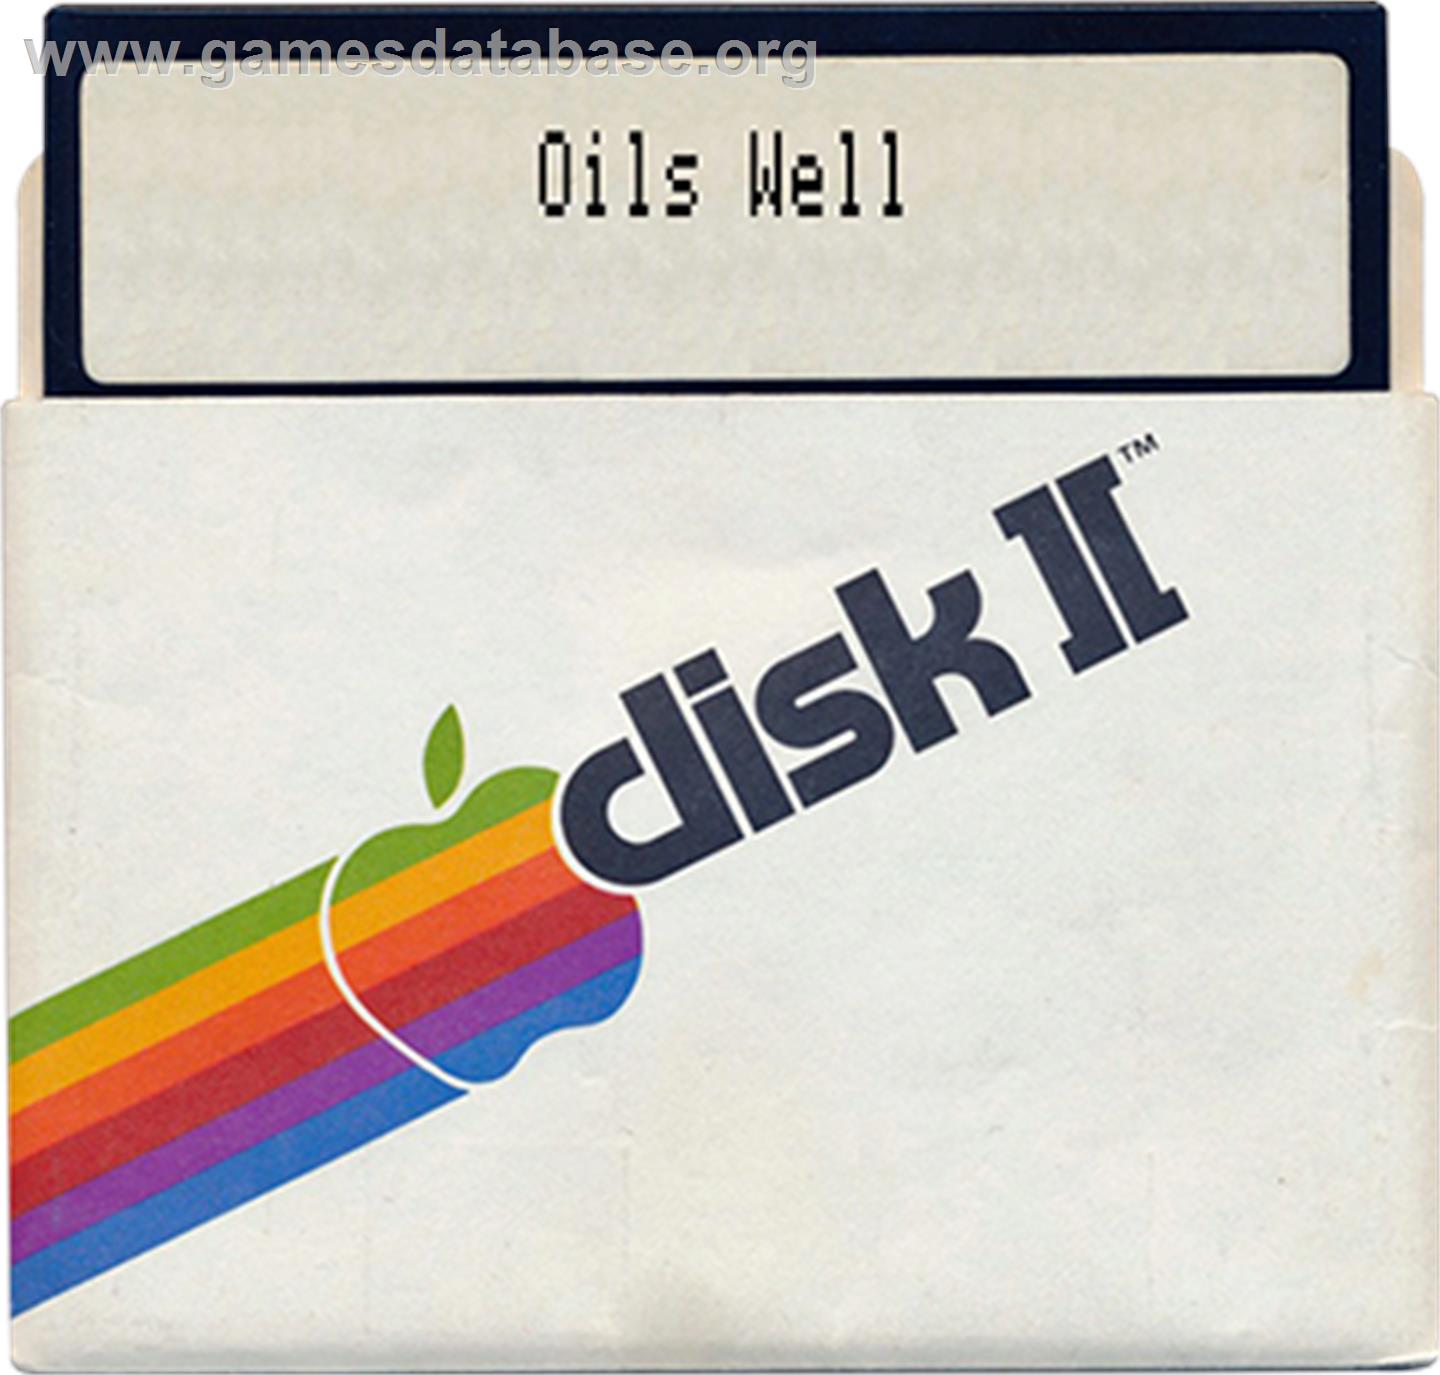 Oil's Well - Apple II - Artwork - Disc